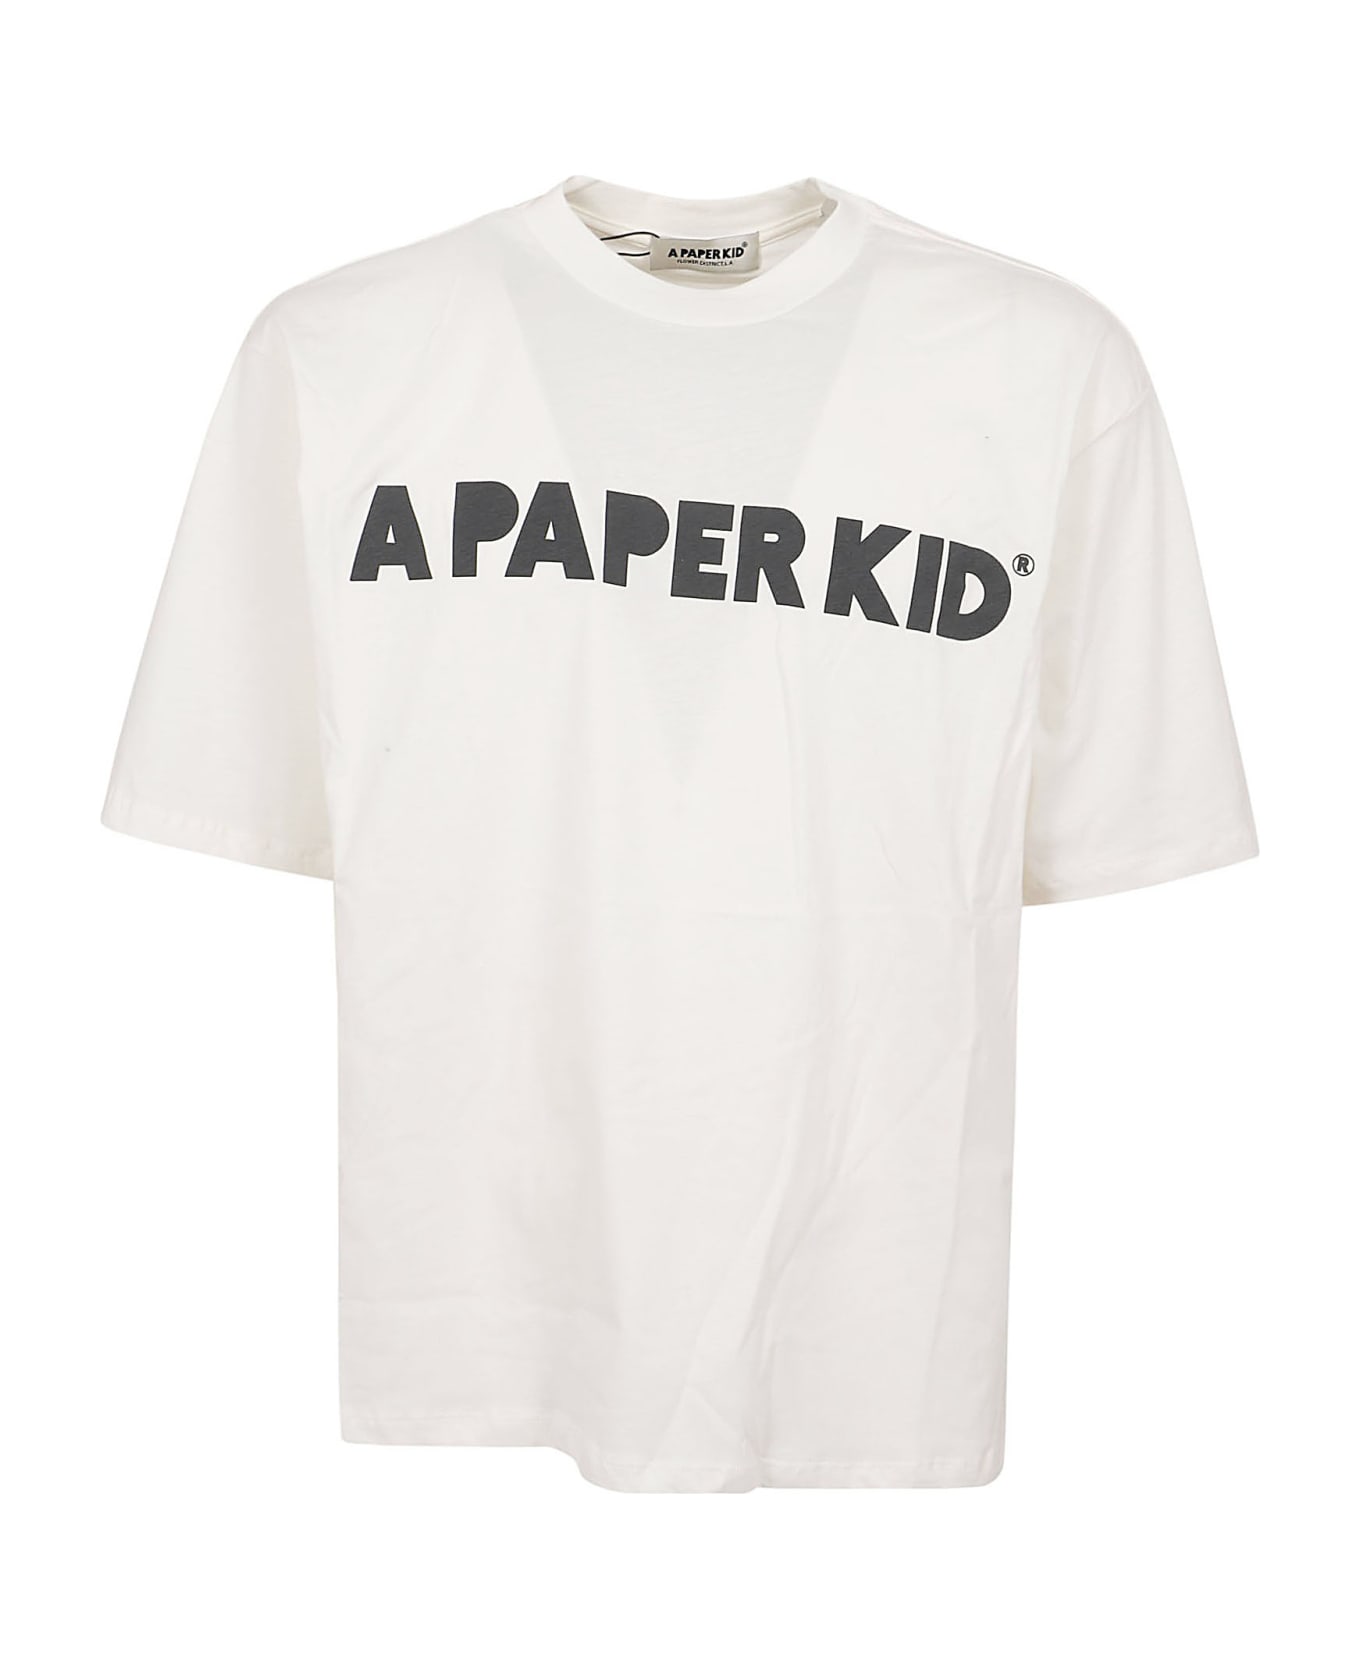 A Paper Kid T-shirt Unisex - Crema Cream